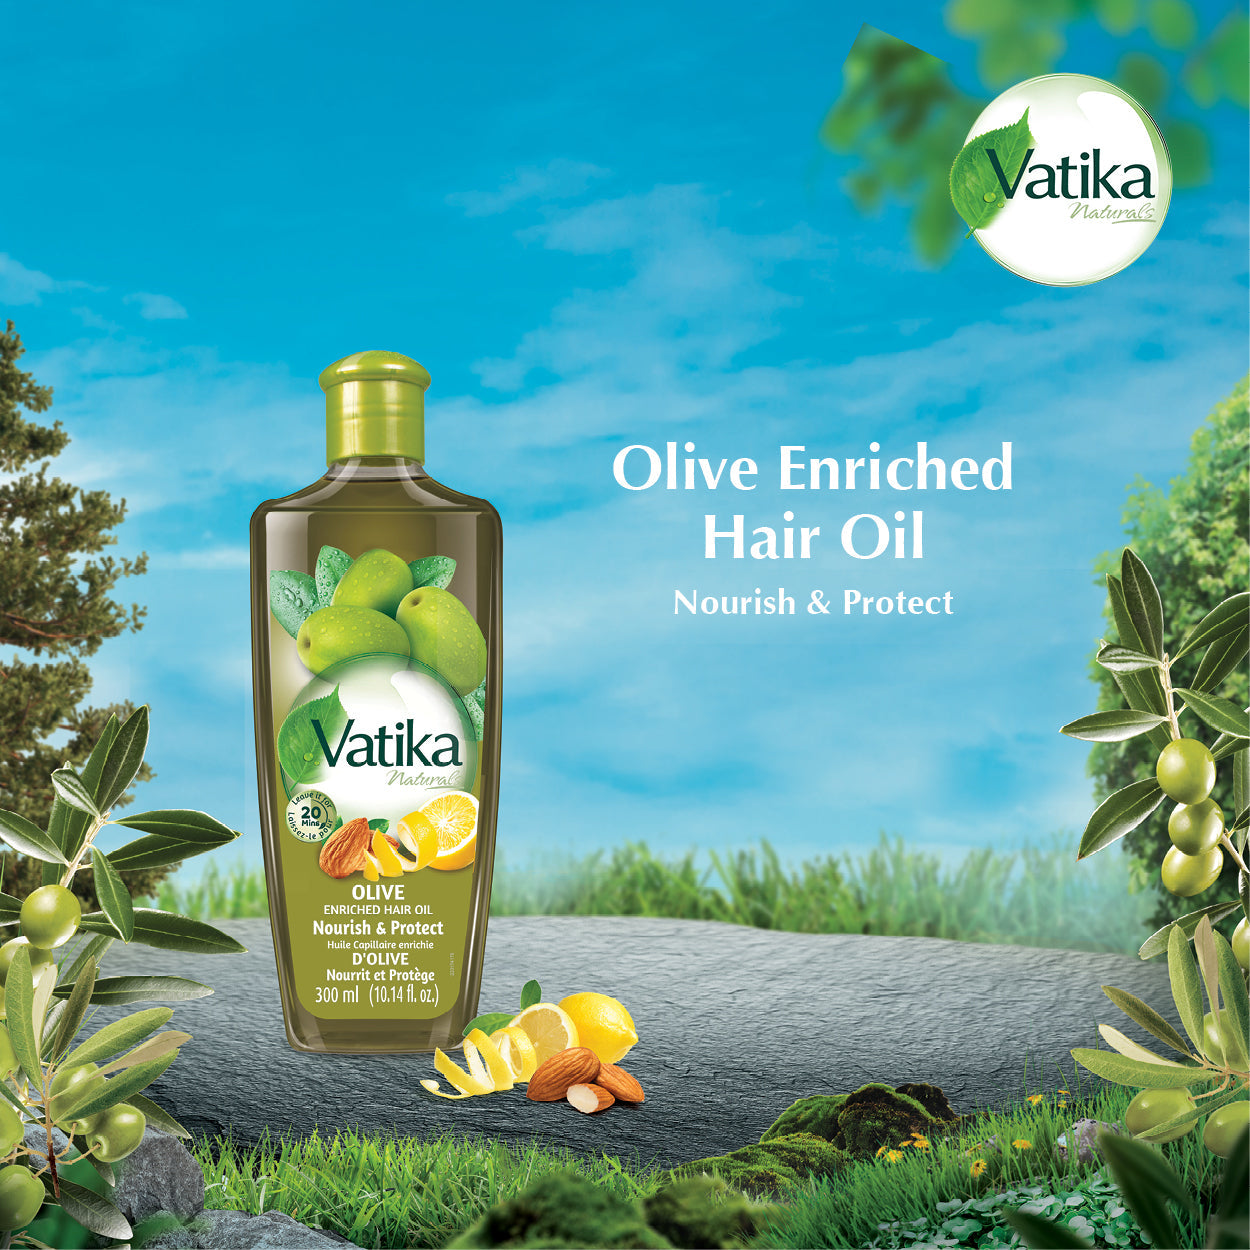 Vatika Naturals Olive Enriched Hair Oil